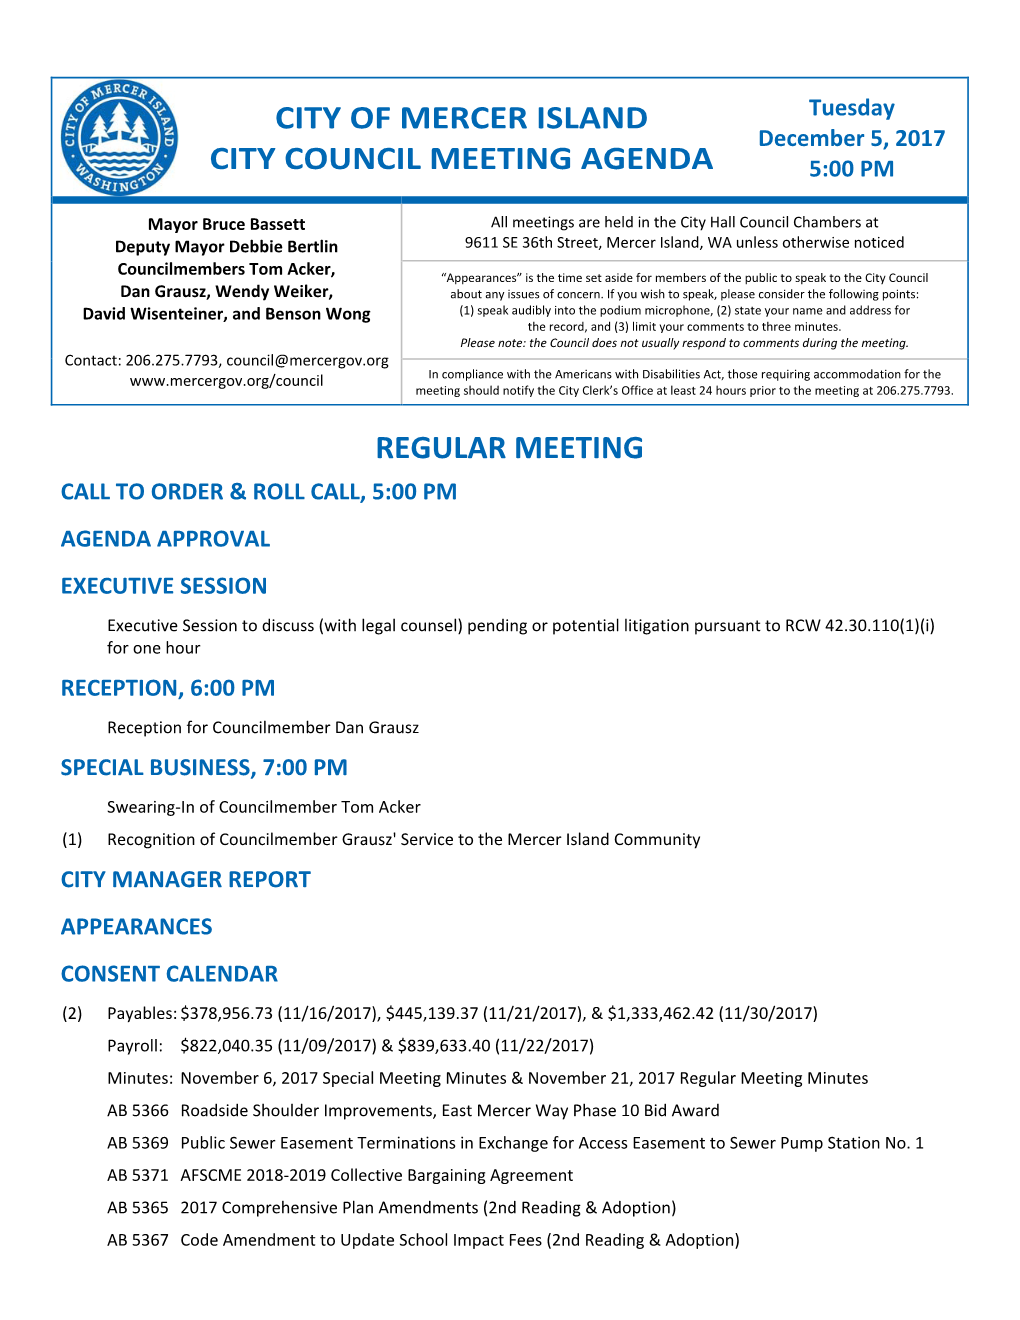 City of Mercer Island City Council Meeting Agenda